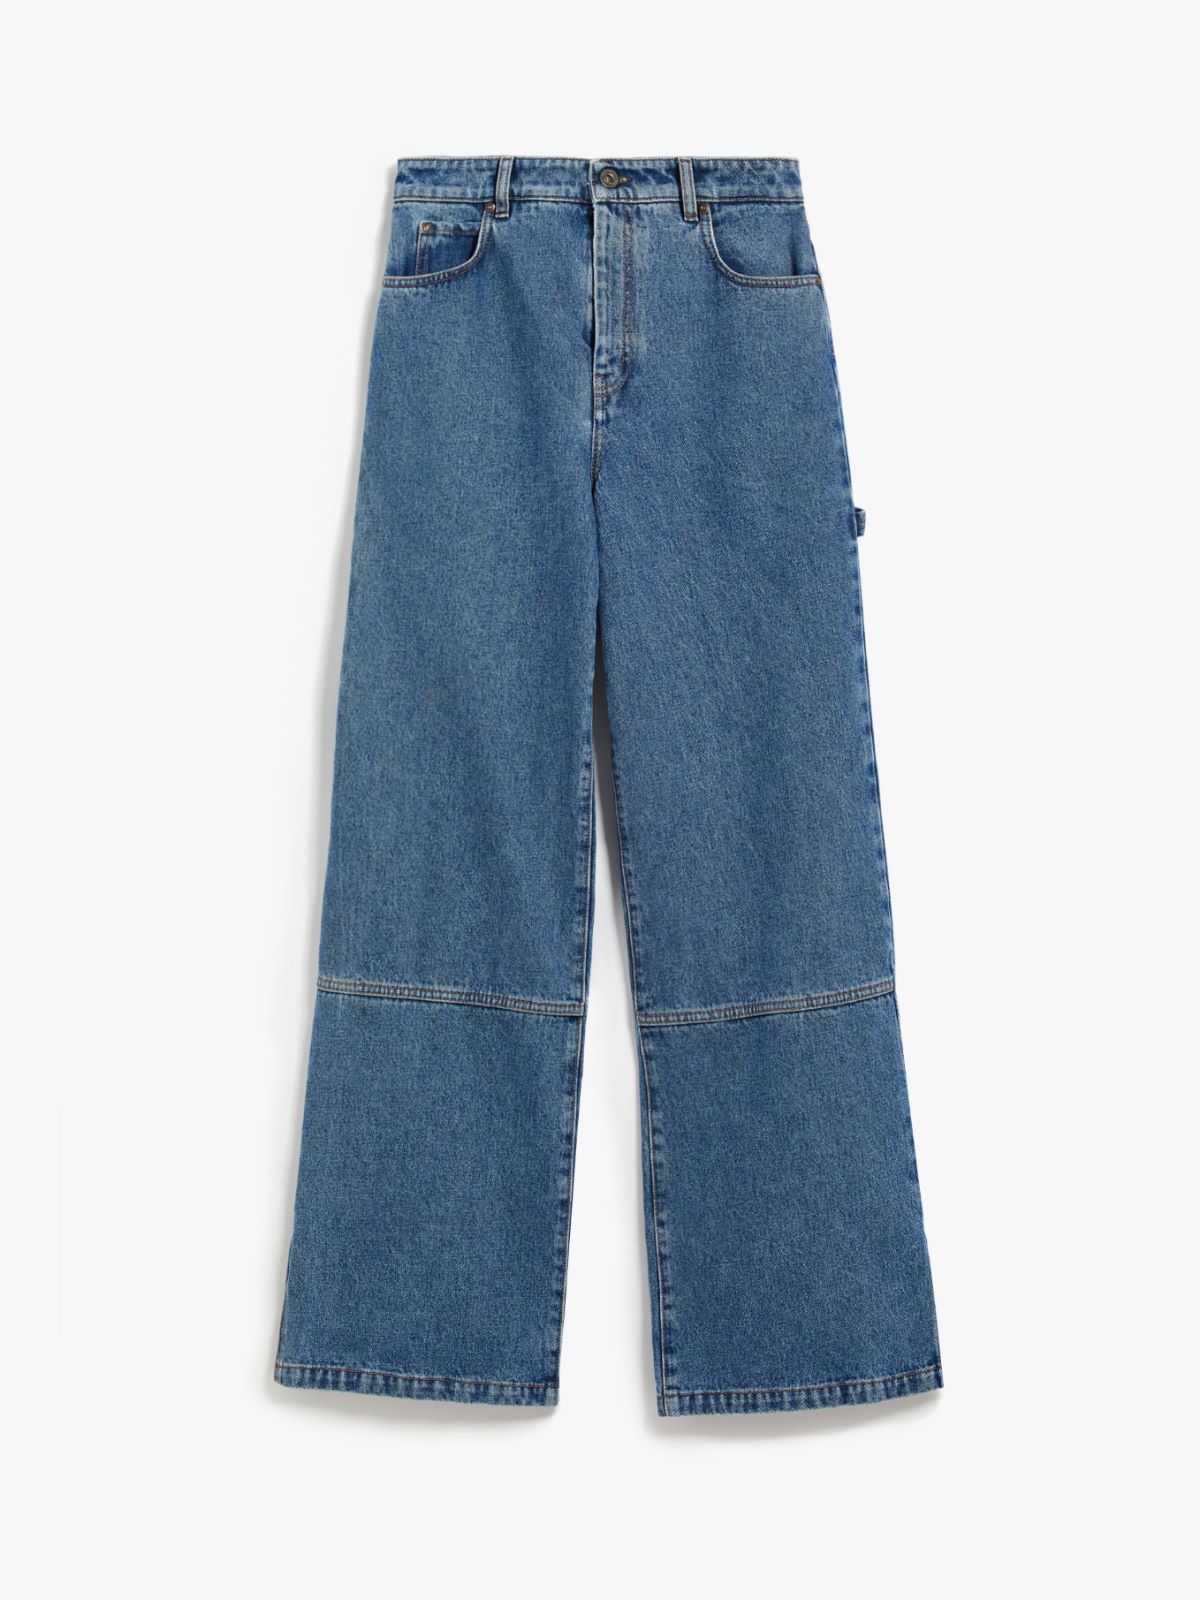 5-pocket worker denim jeans - NAVY - Weekend Max Mara - 6